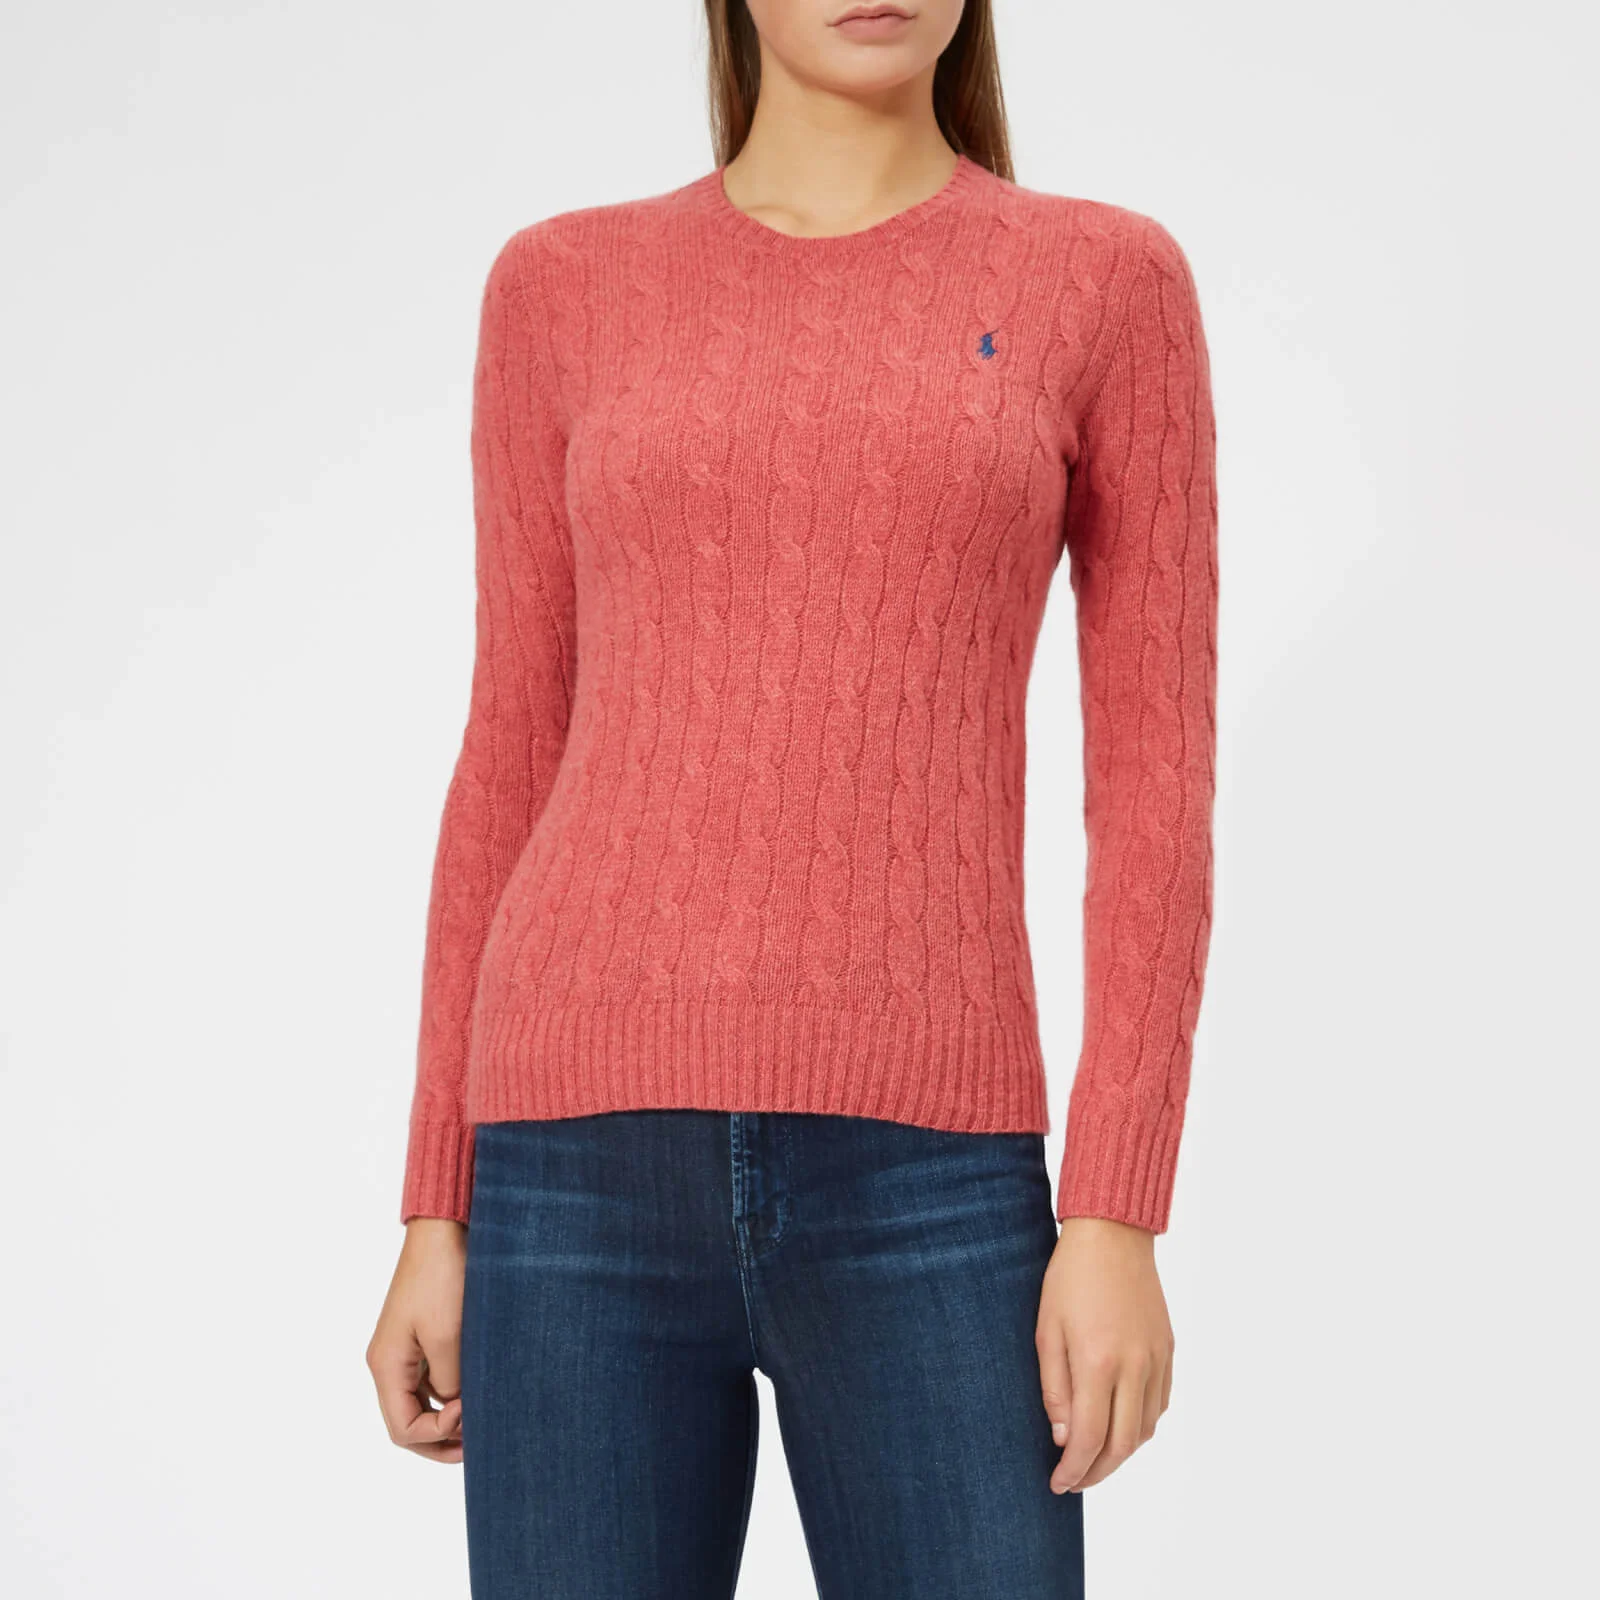 Polo Ralph Lauren Women's Julianna-Classic-Long Sleeve-Sweater - Red Slate Heather Image 1